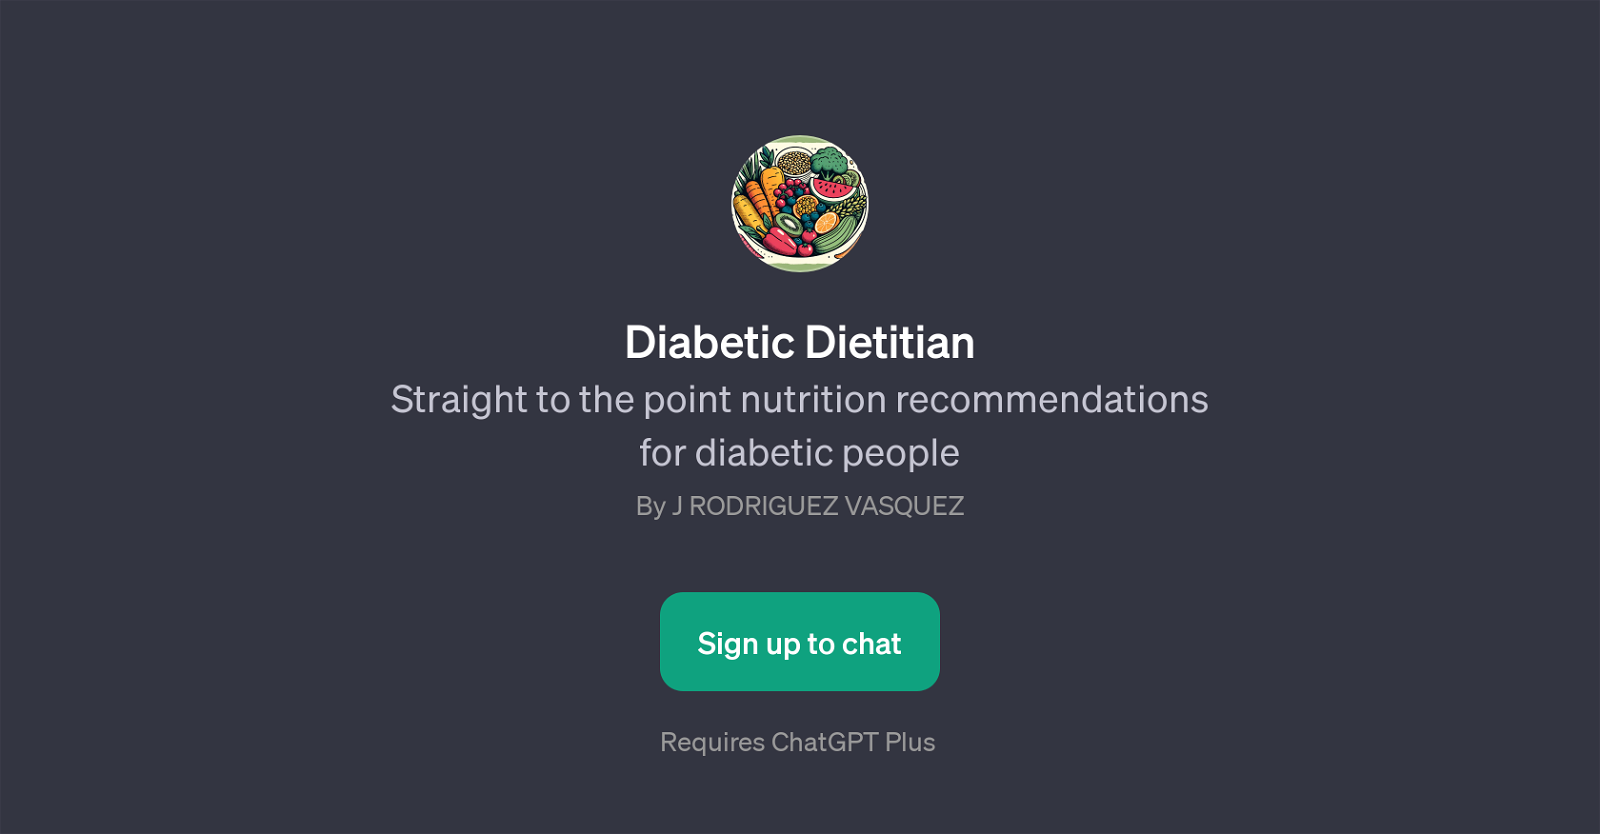 Diabetic Dietitian website